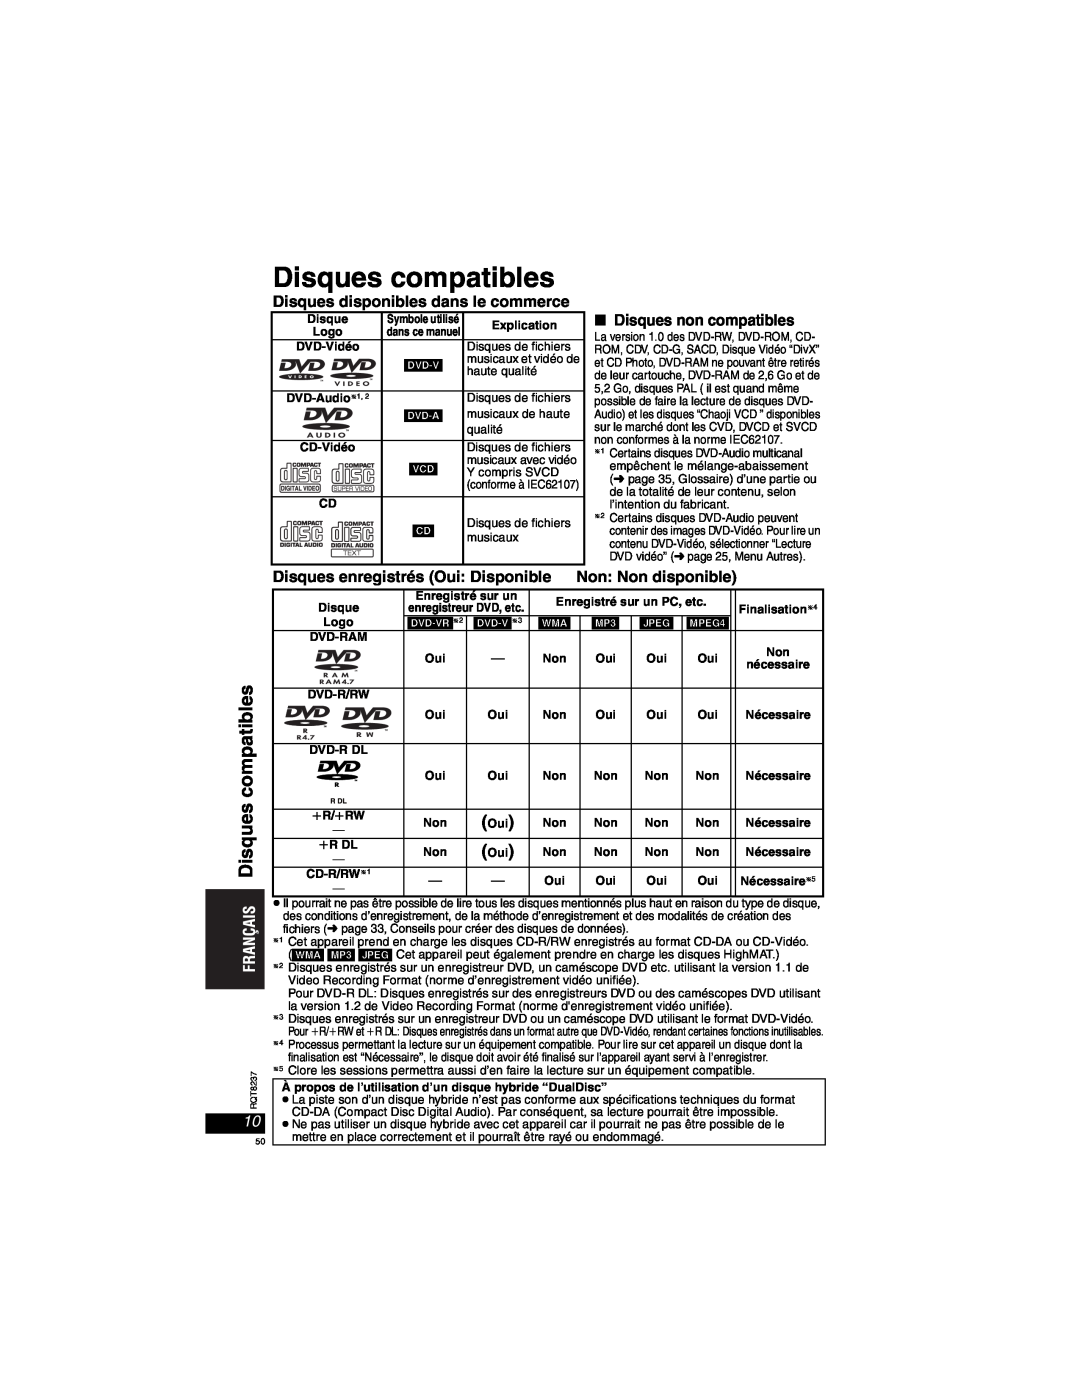 Panasonic DVD-LX97 Disques compatibles, Disques disponibles dans le commerce, w Disques non compatibles, Explication, Logo 